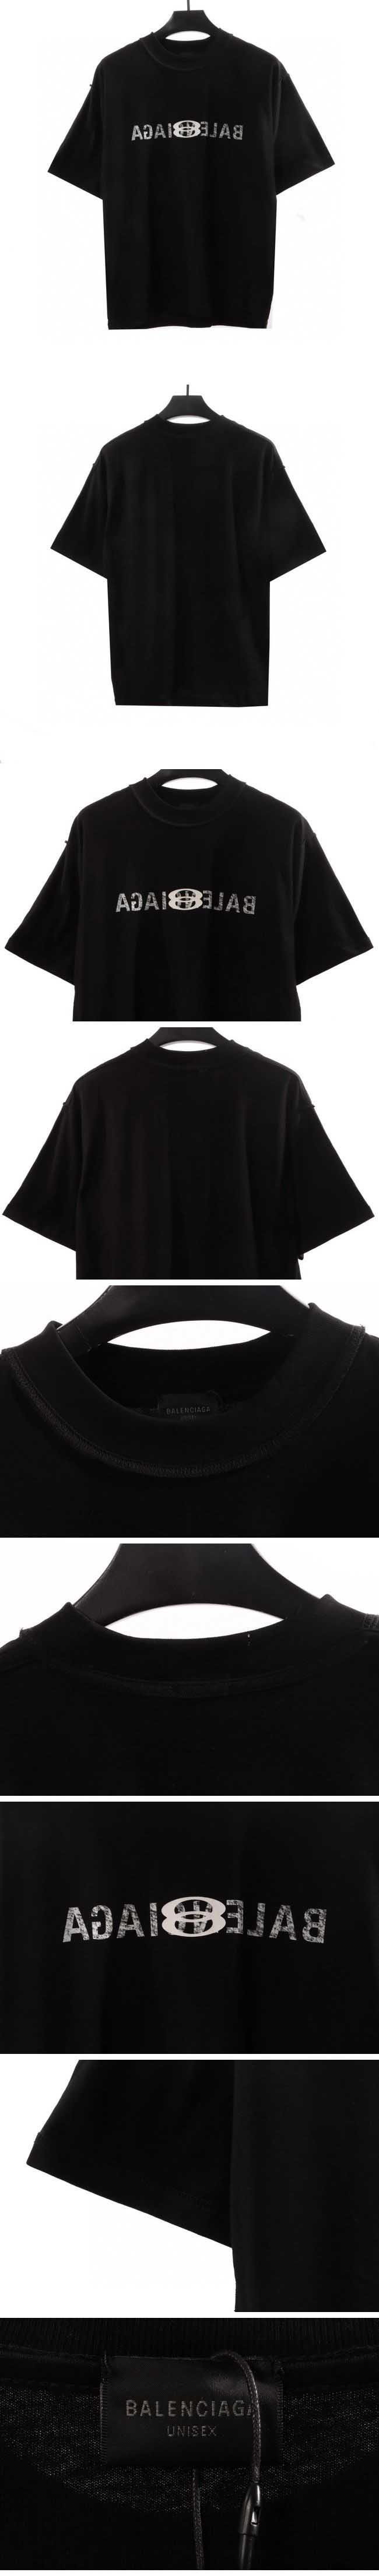 Balenciaga Inversion Logo Tee Black バレンシアガ インバージョン ロゴ Tシャツ ブラック